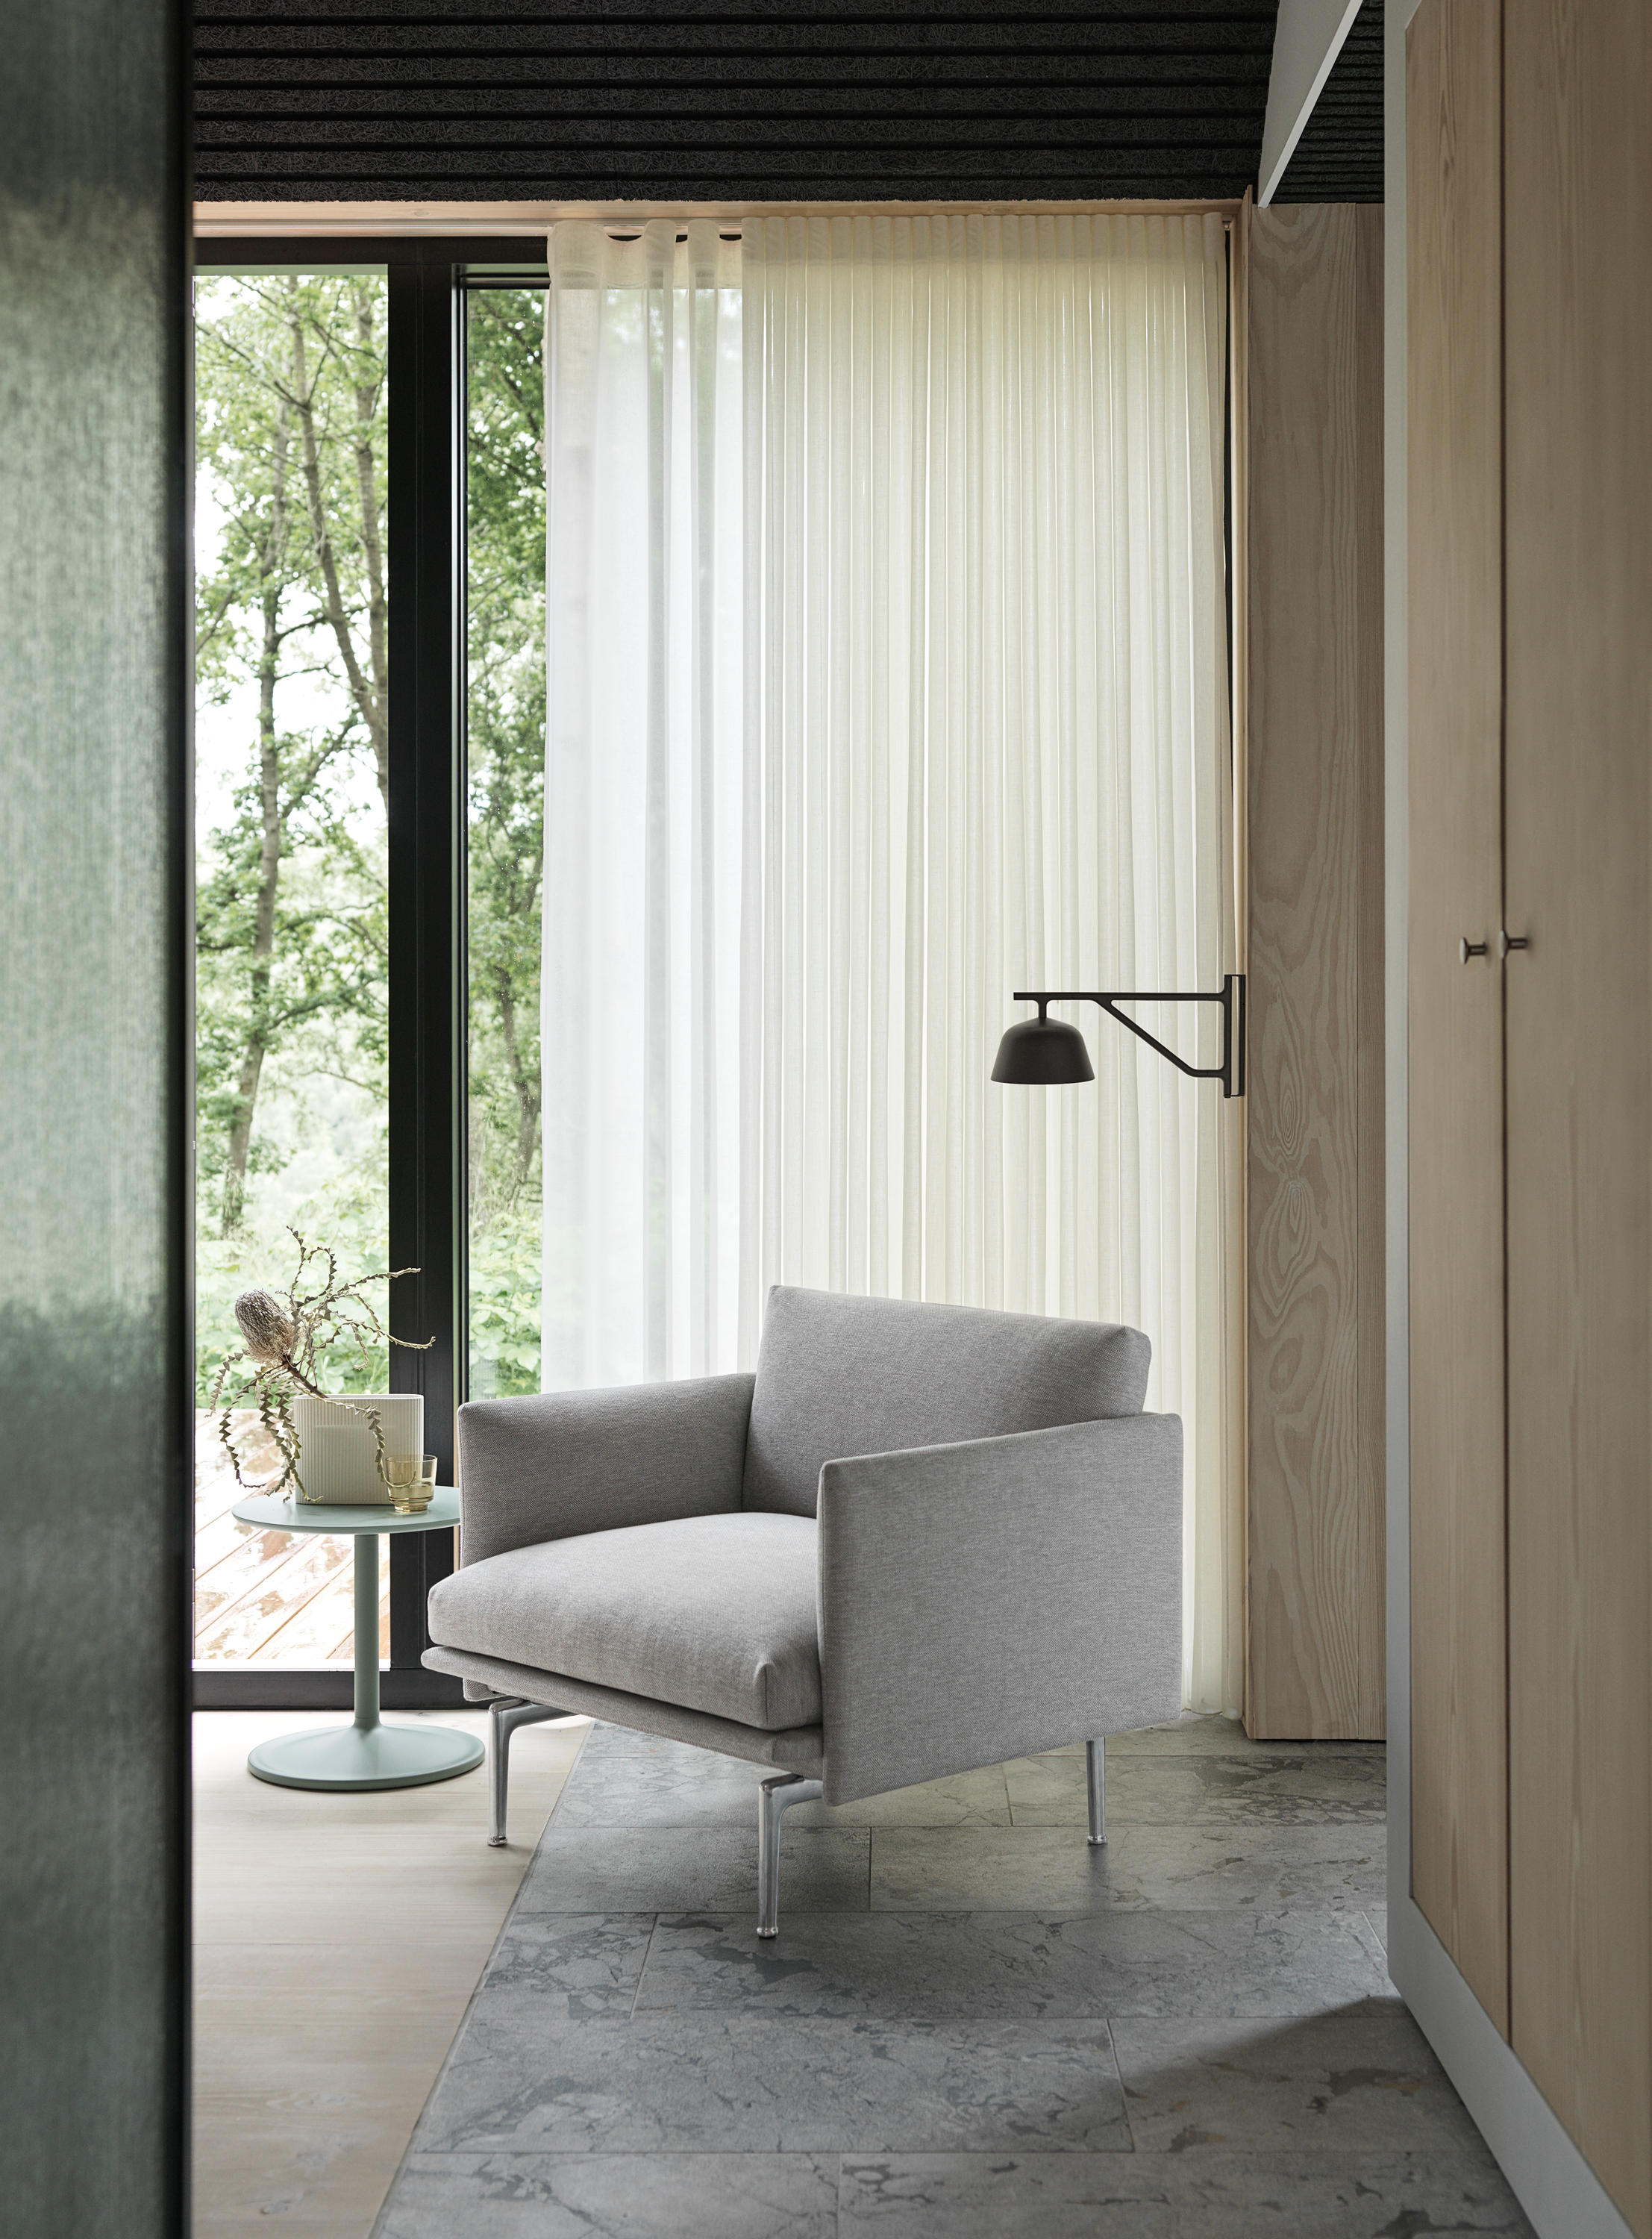 Leger vocaal beloning Outline Studio Sofa & designer furniture | Architonic